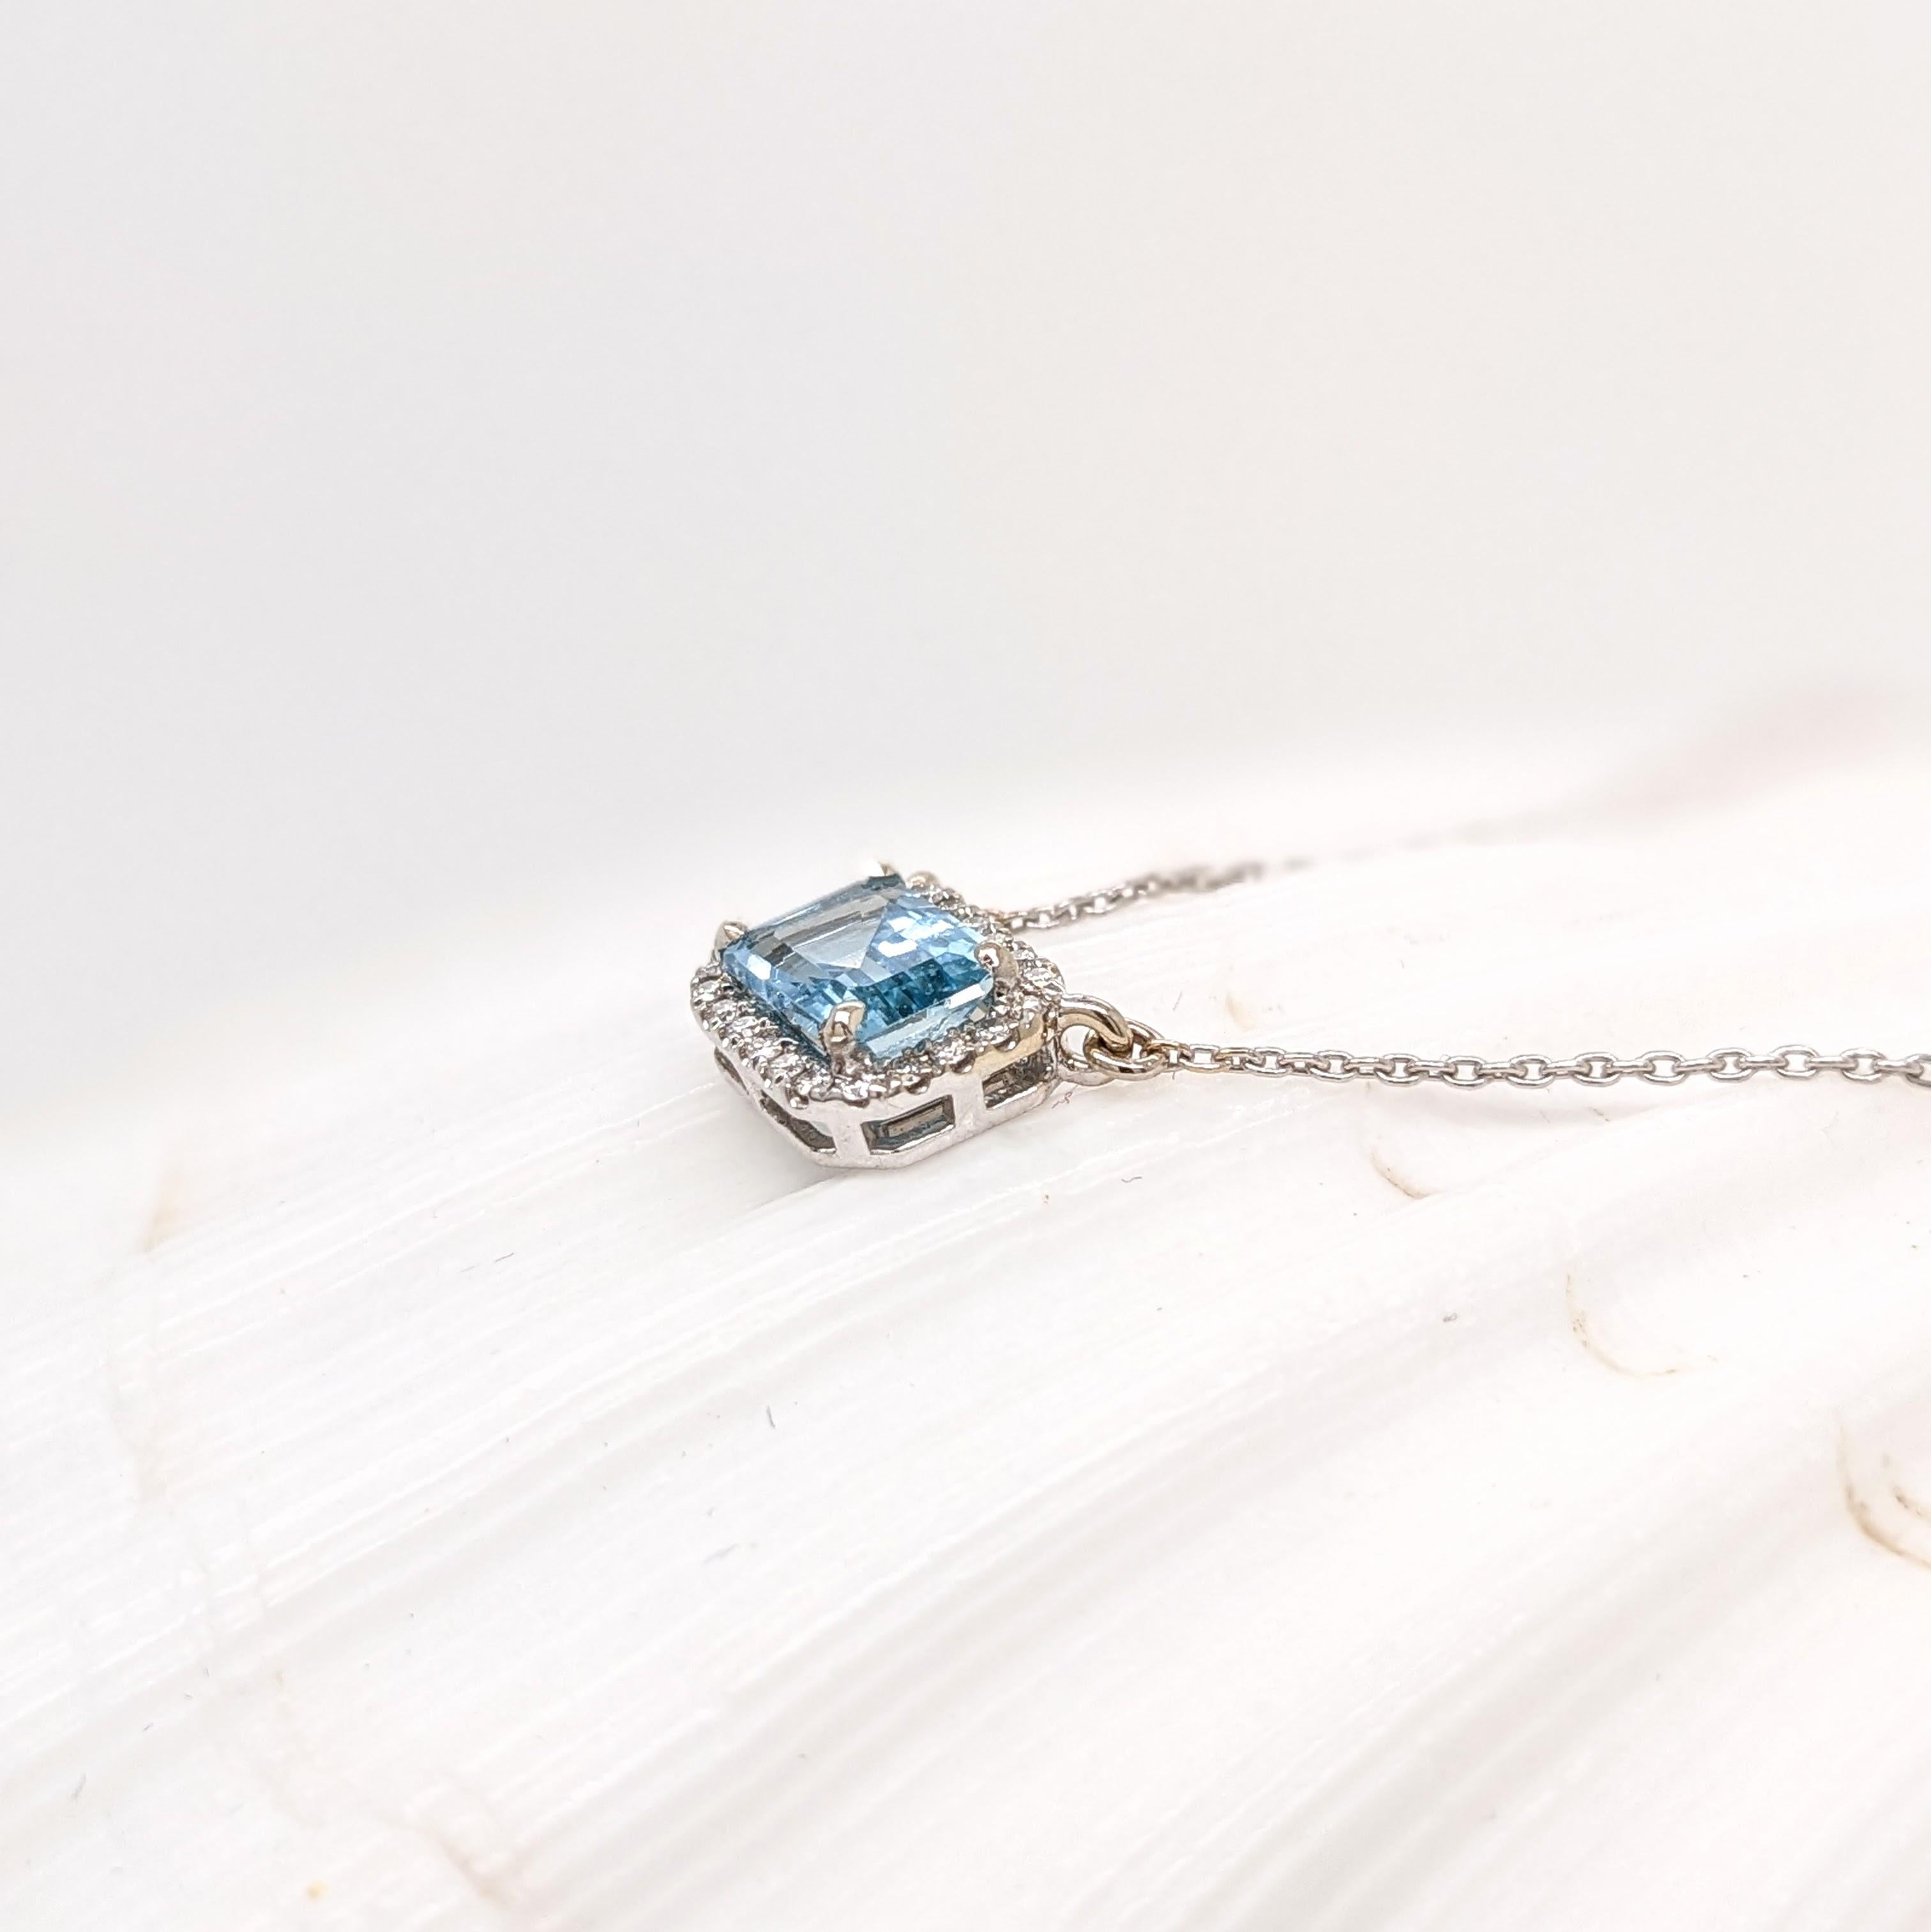 Aquamarine Pendant w Natural Diamonds in Solid 14K White Gold Emerald Cut 5x7mm